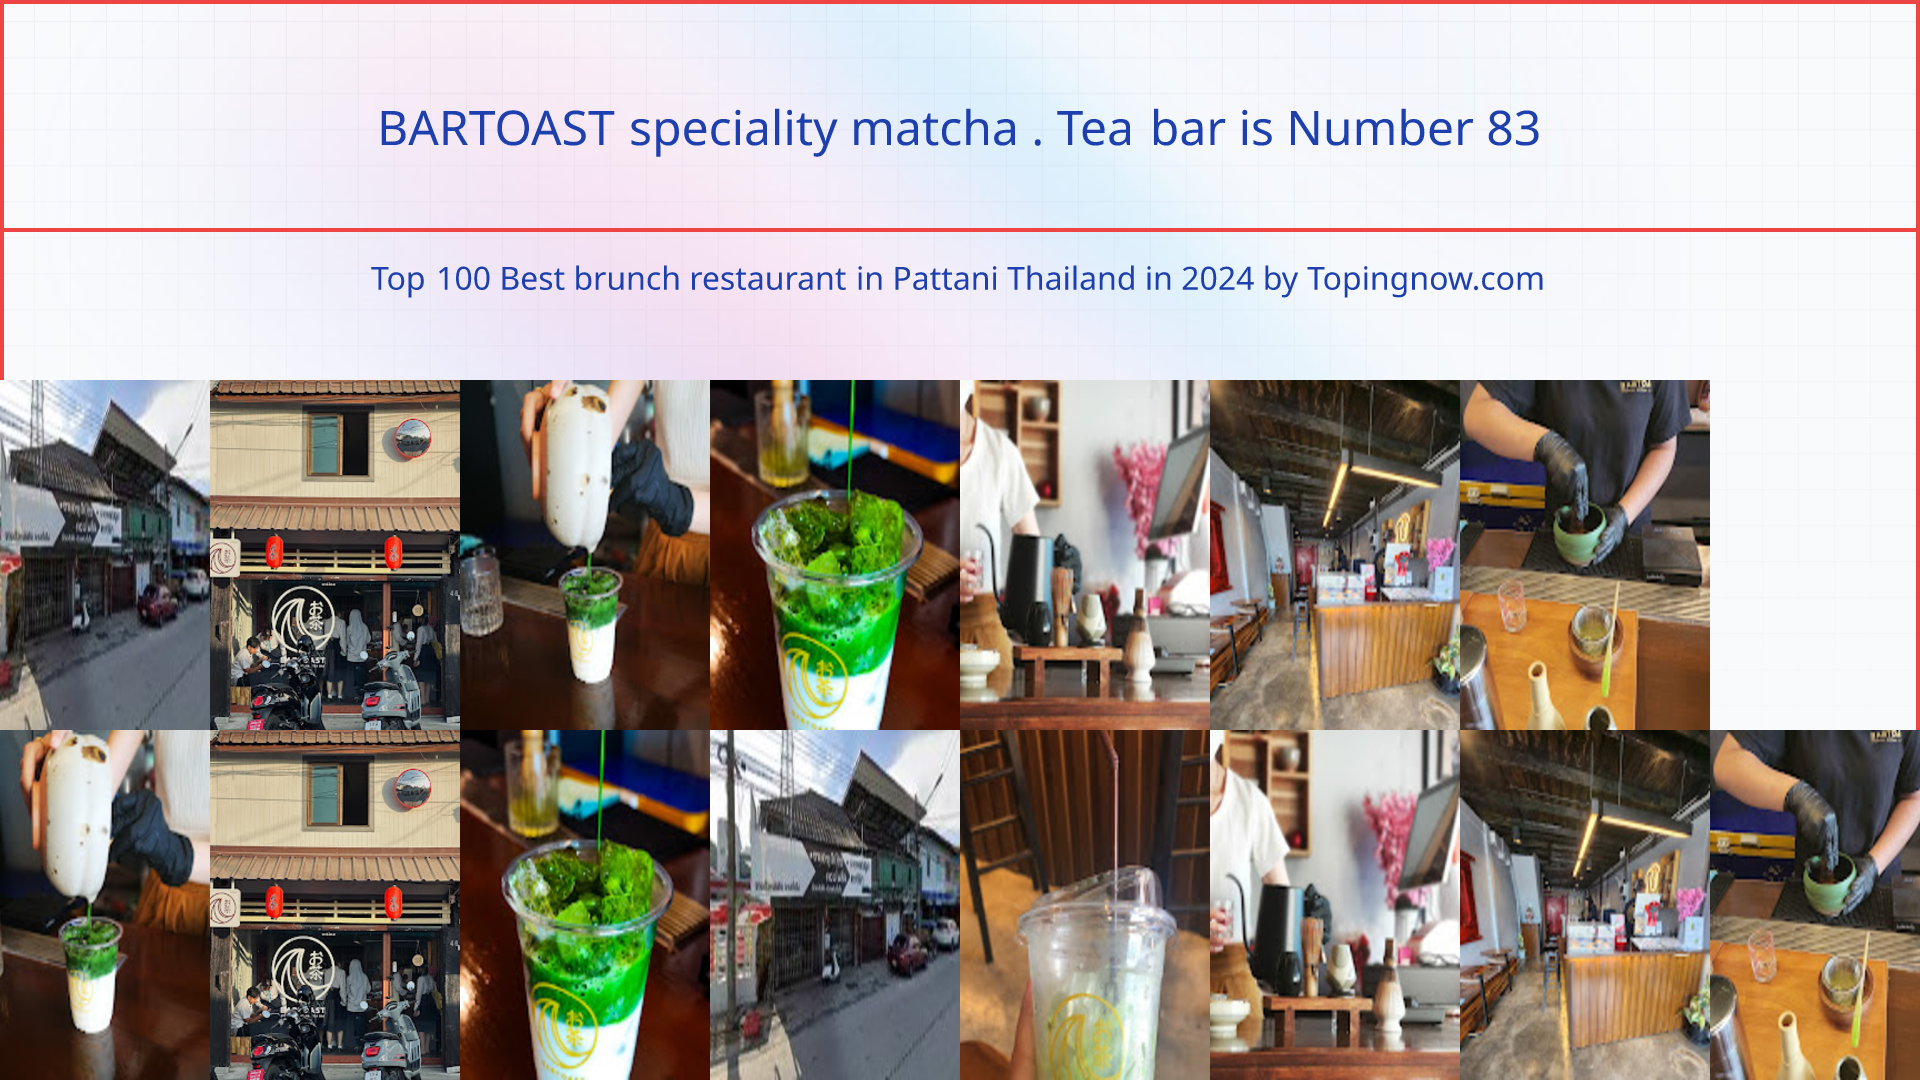 BARTOAST speciality matcha . Tea bar: Top 100 Best brunch restaurant in Pattani Thailand in 2024